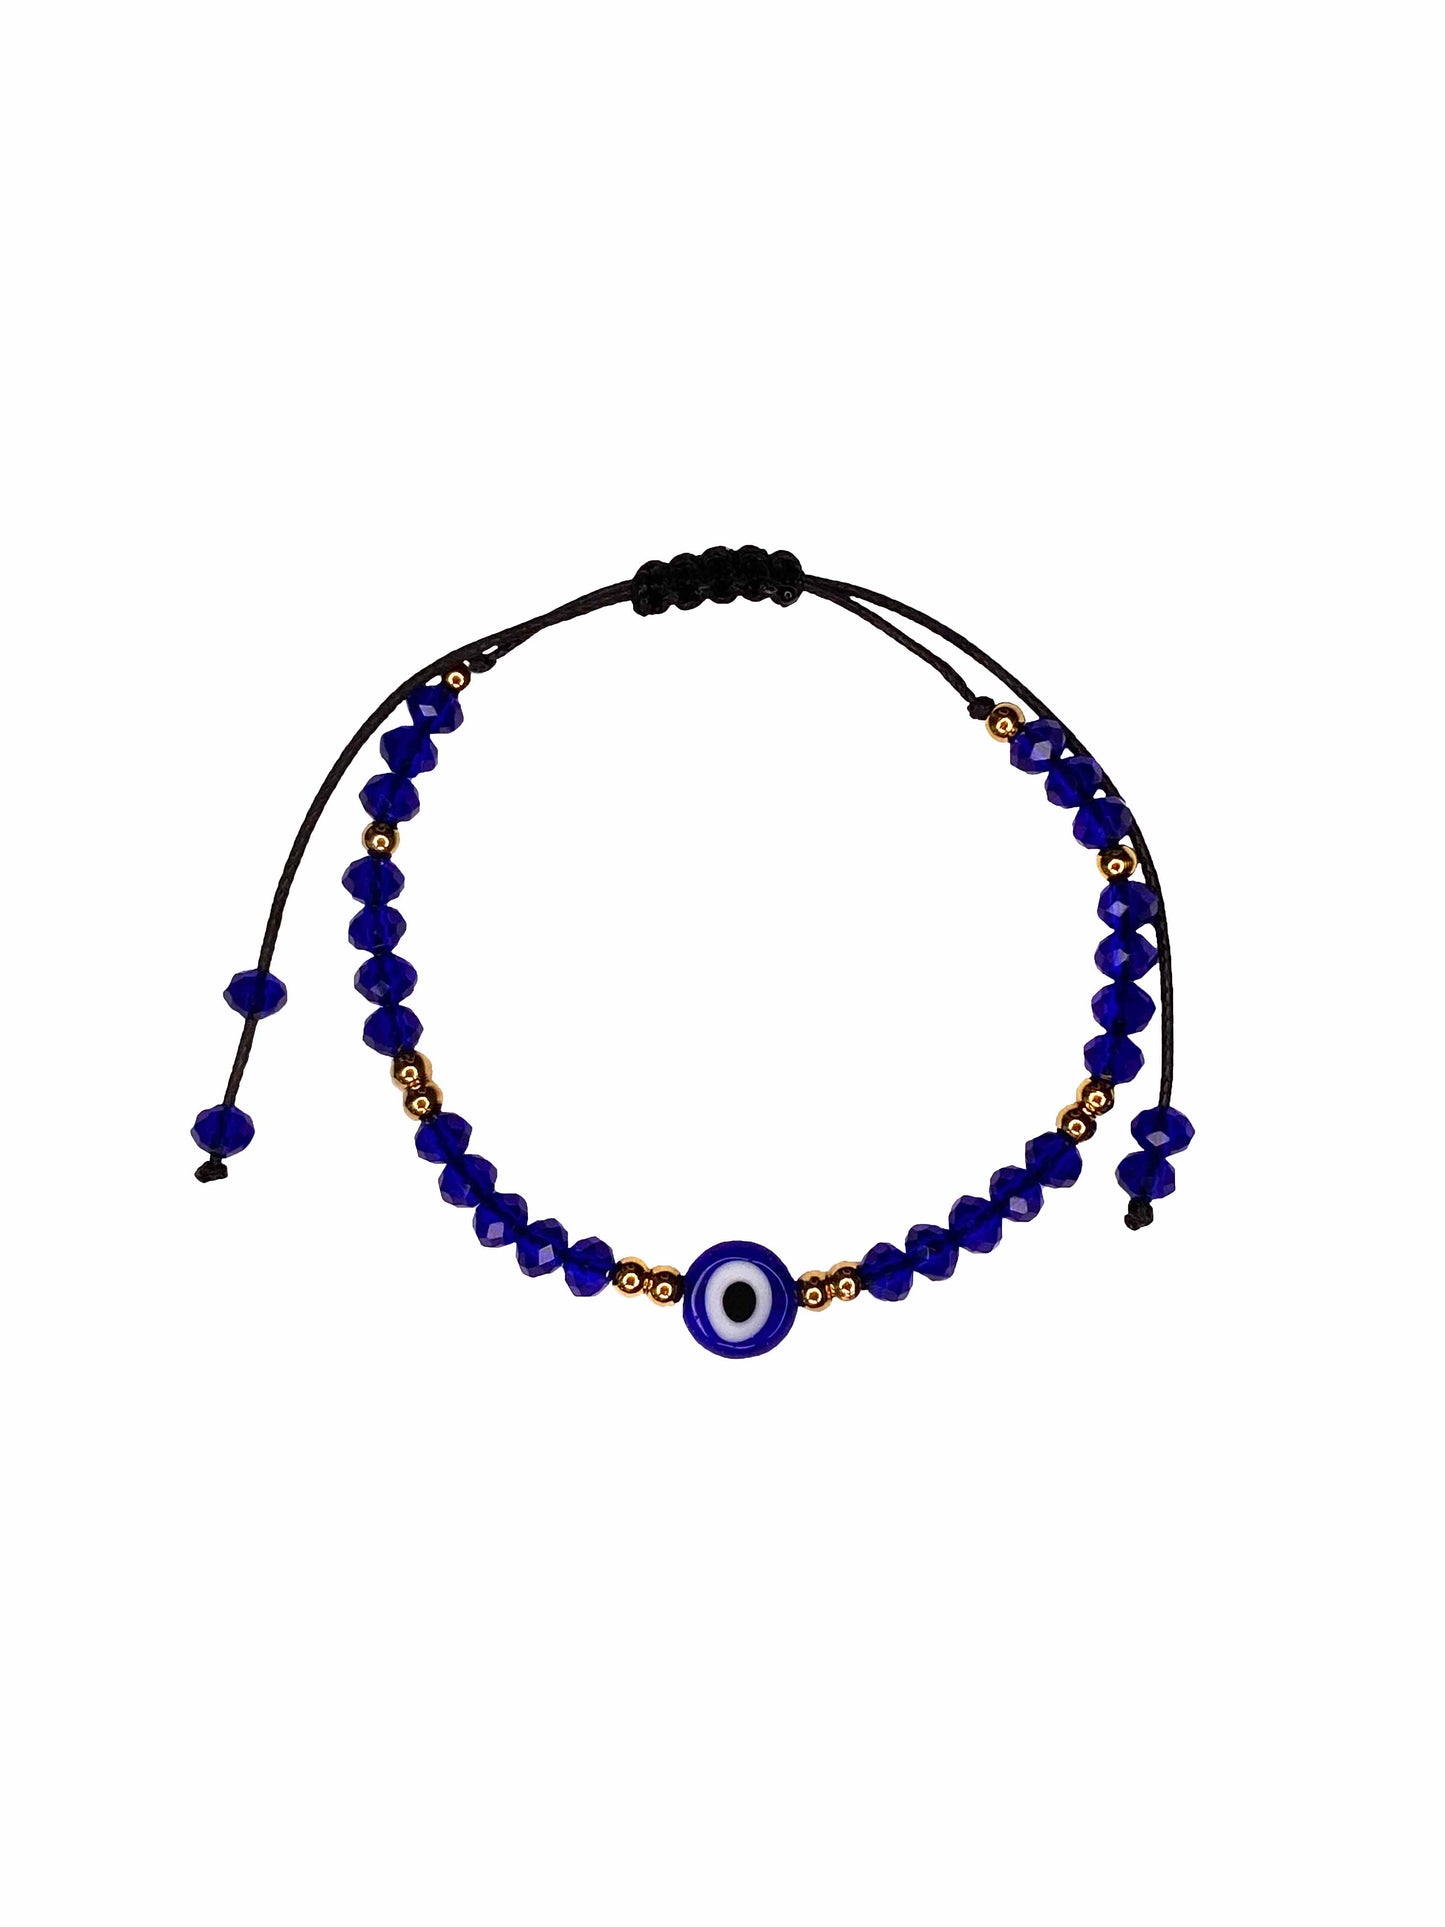 Handmade navy blue crystal beaded nazar amulet bracelet with sliding knot ties.